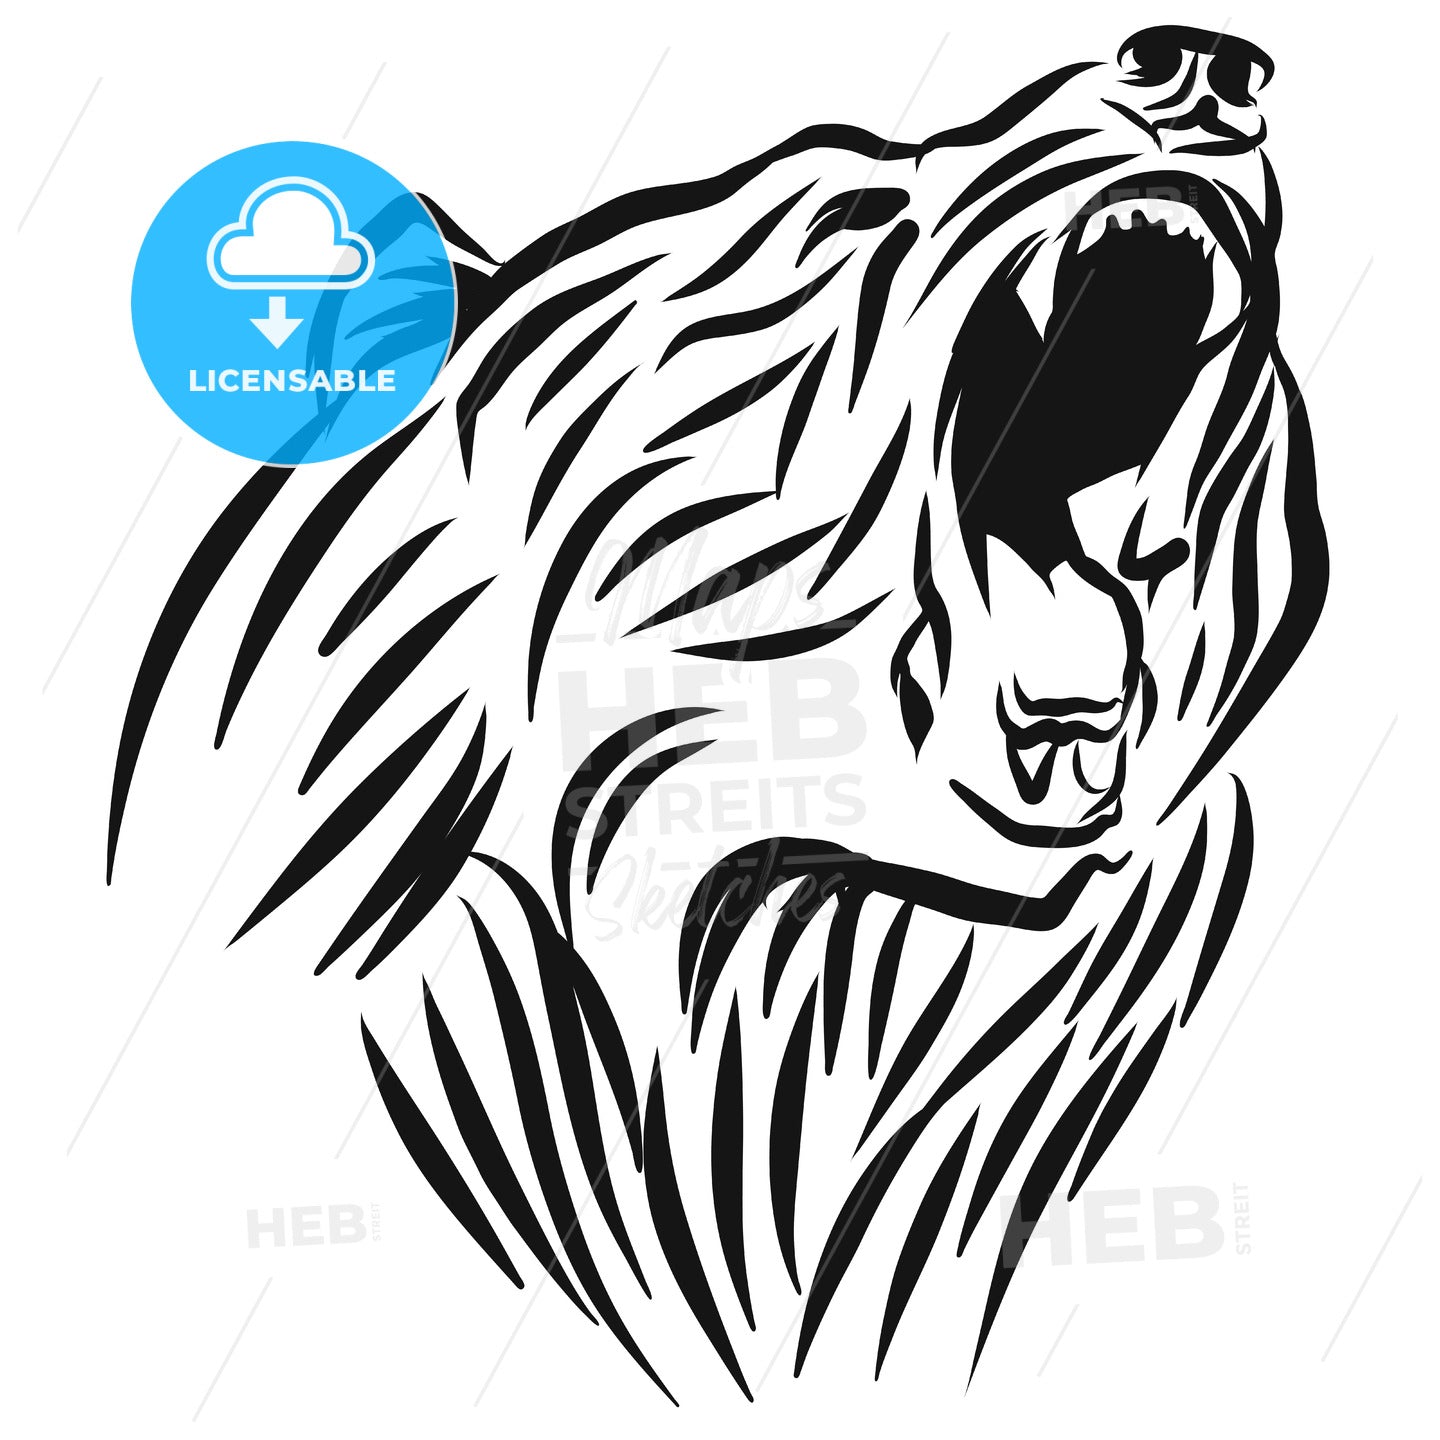 A roaring Bear head logo. – instant download